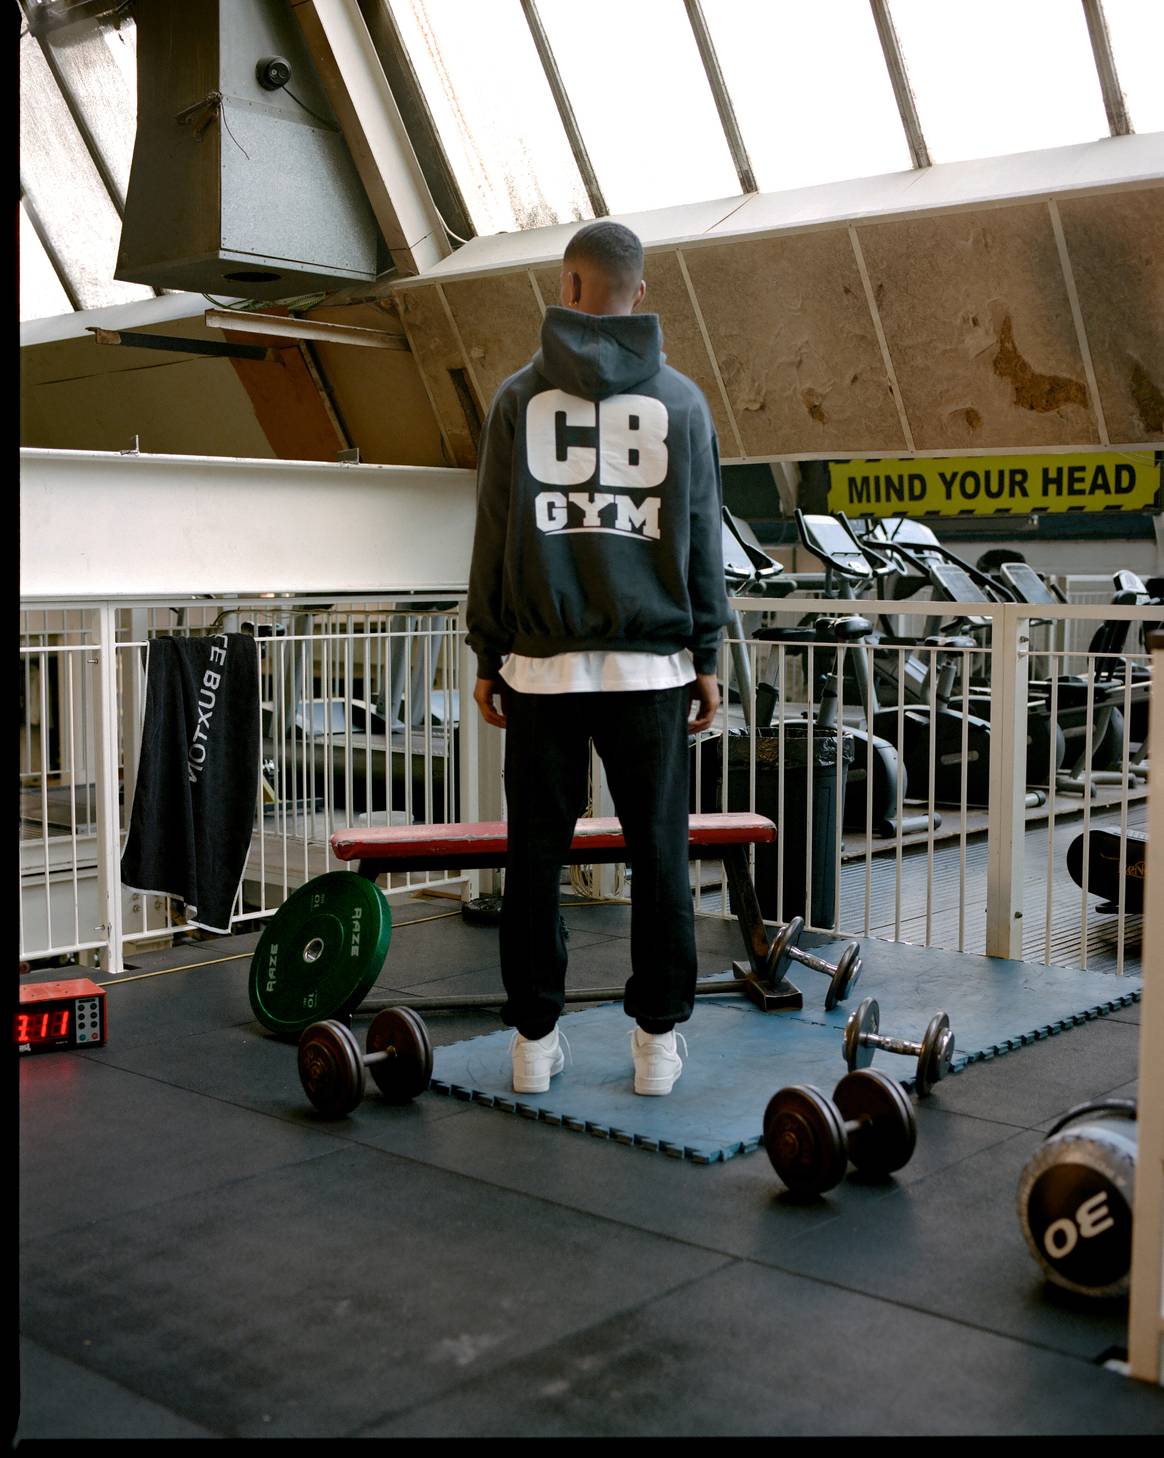 Image: Cole Buxton ‘CB Gym’ End.